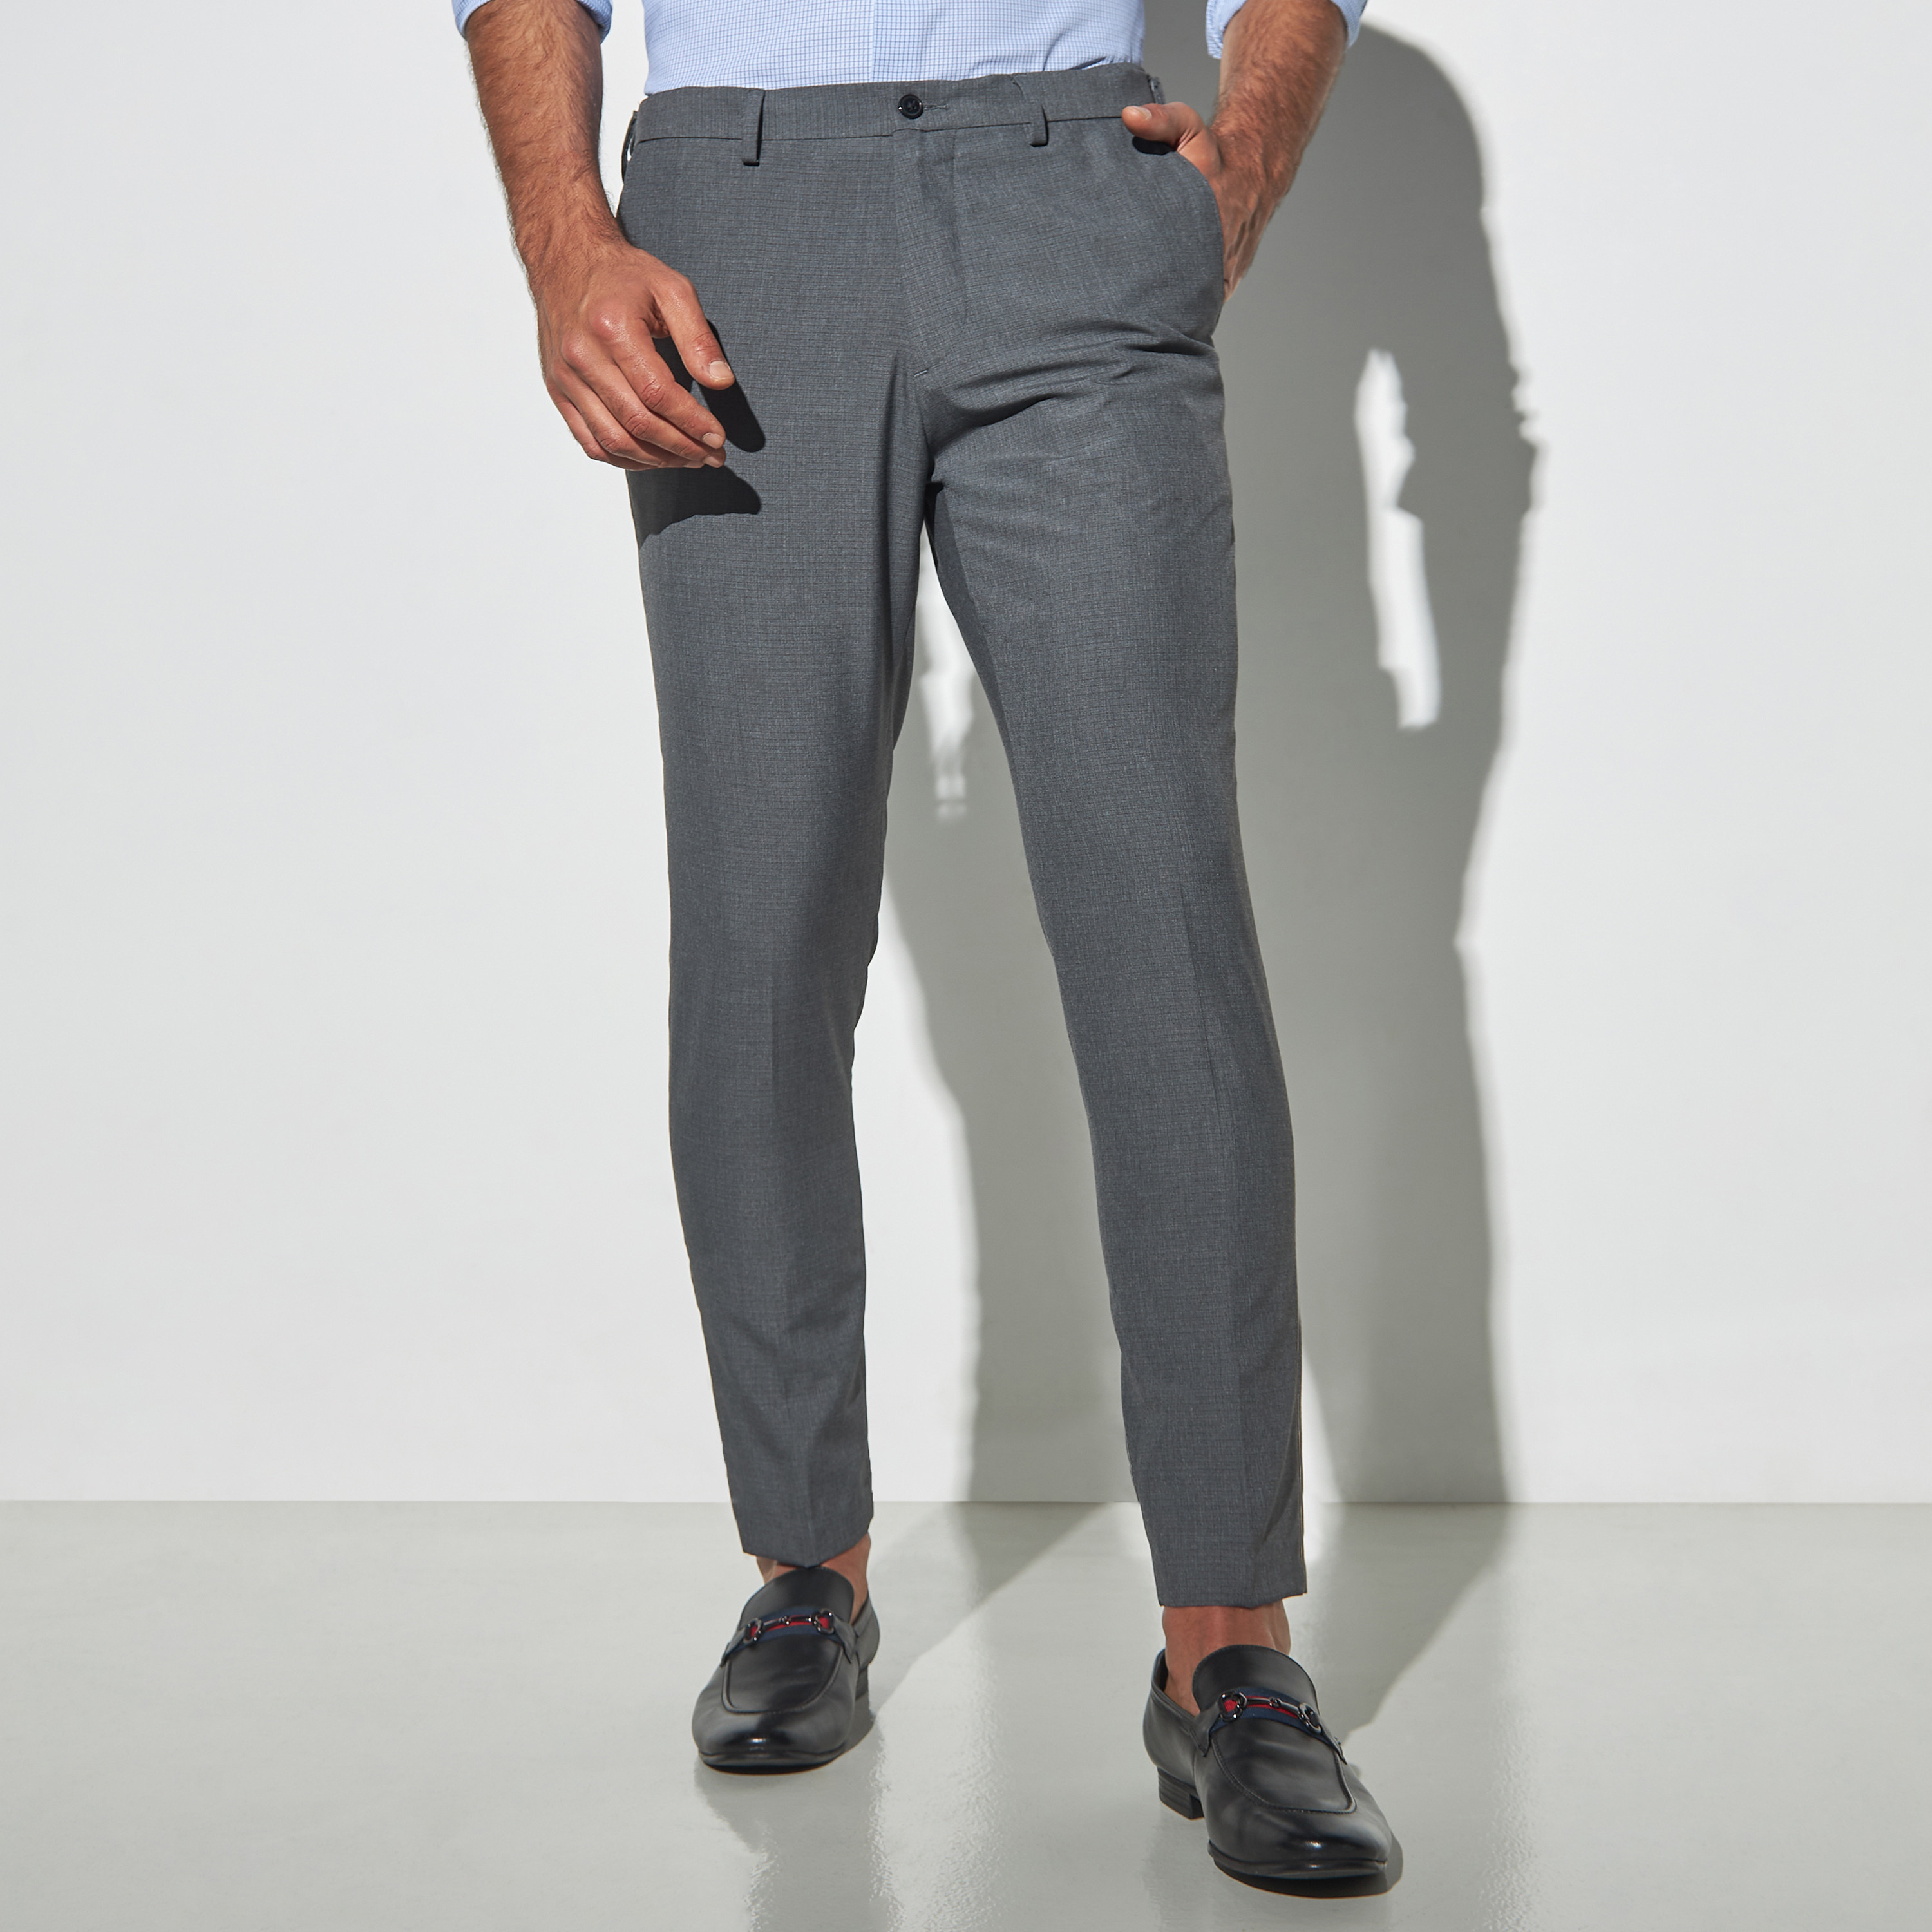 John Lewis Slim Fit Starter Suit Trousers, Black at John Lewis & Partners